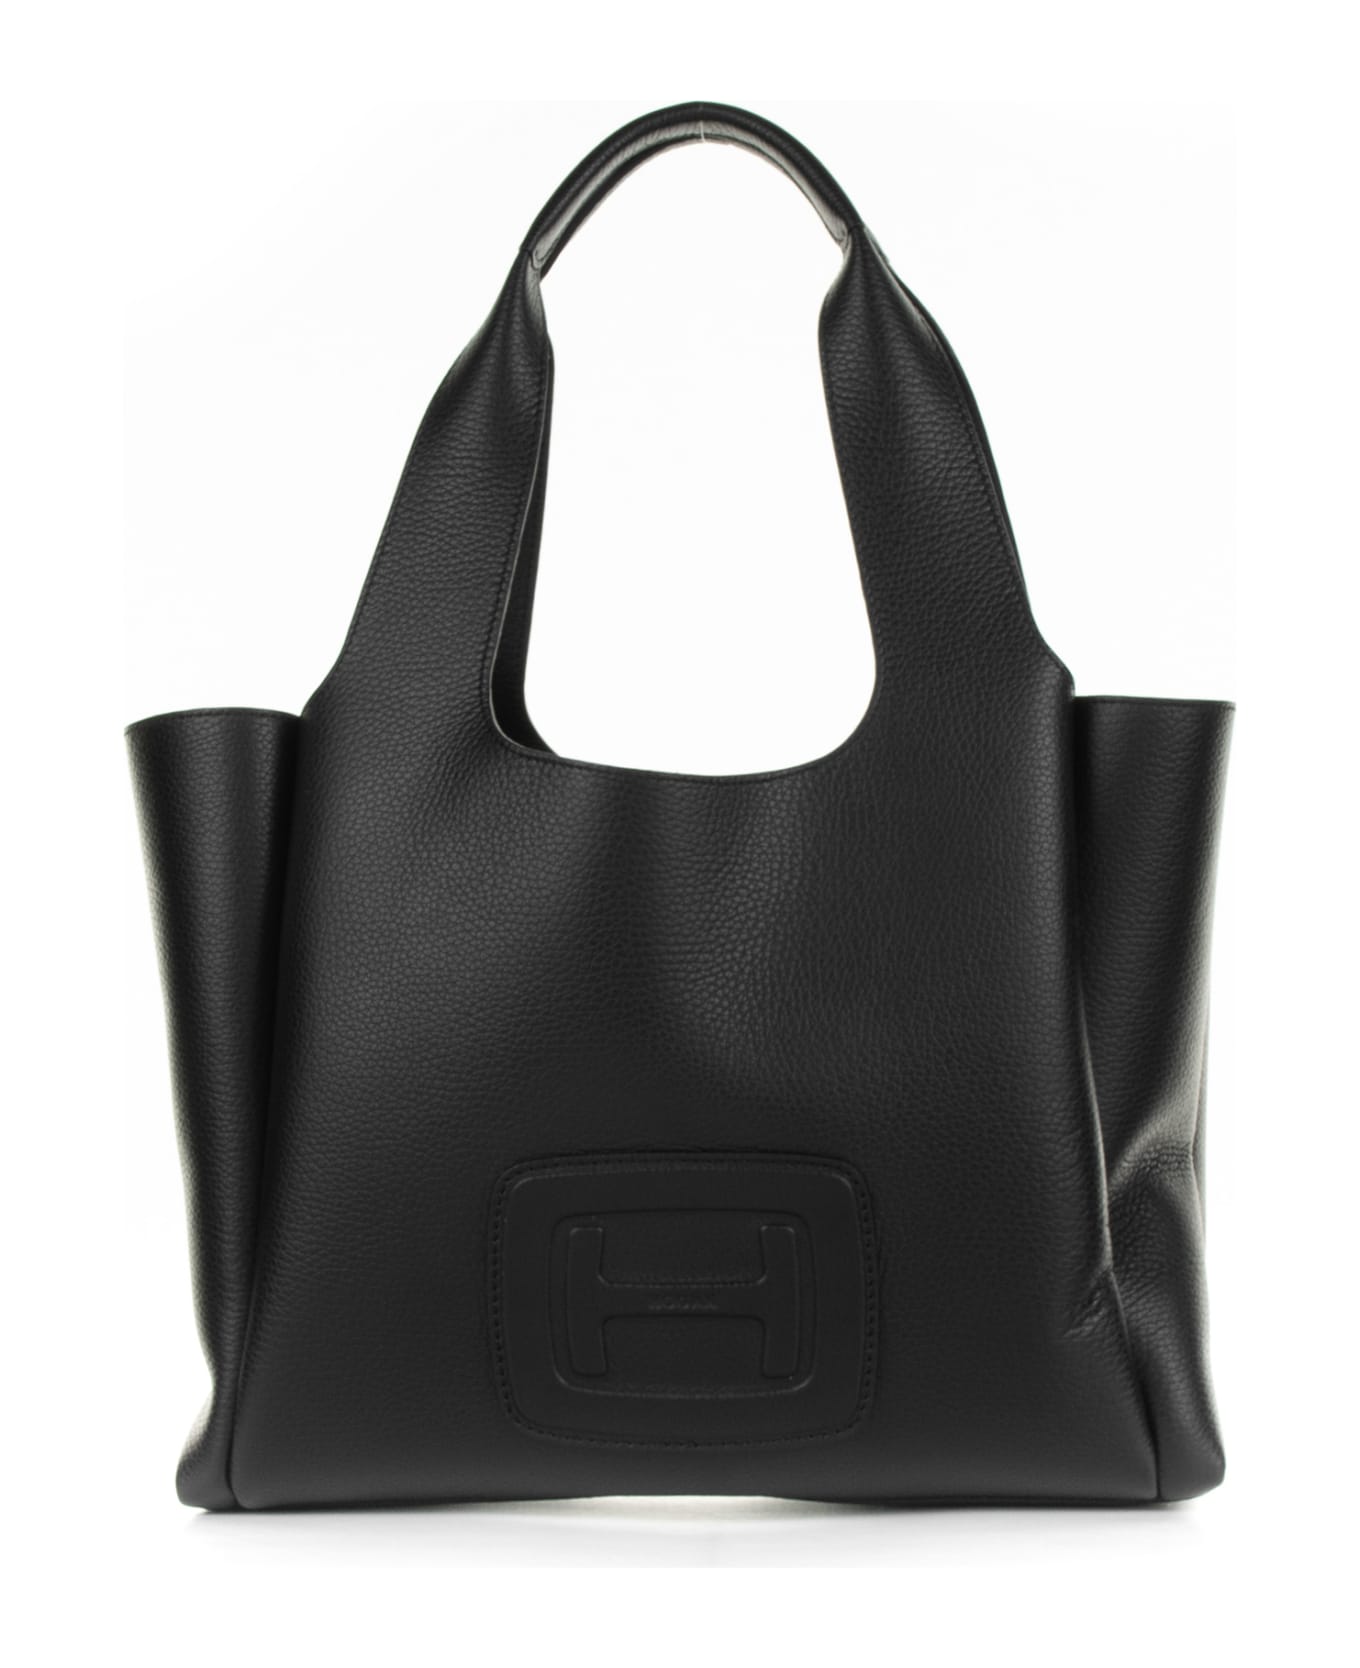 Hogan Medium Black Leather Shopping Bag - NERO